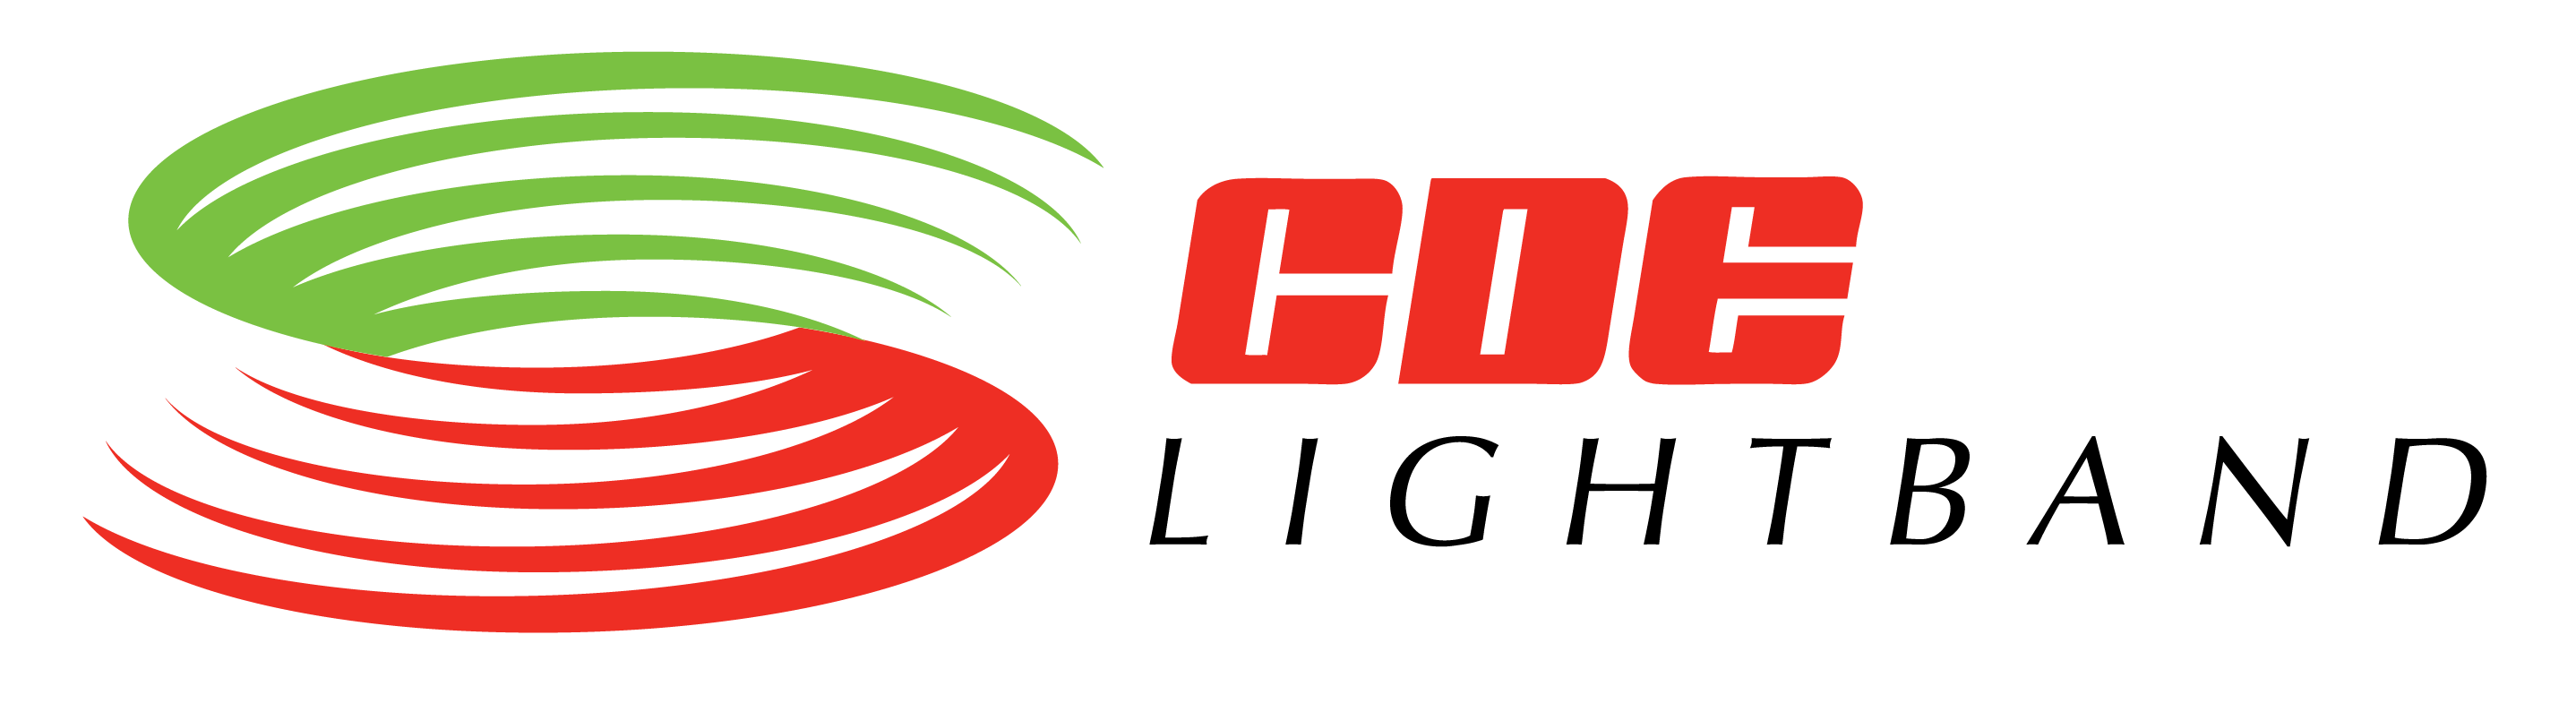 CDE (Clarksville Department of Electricity) Lightband Logo